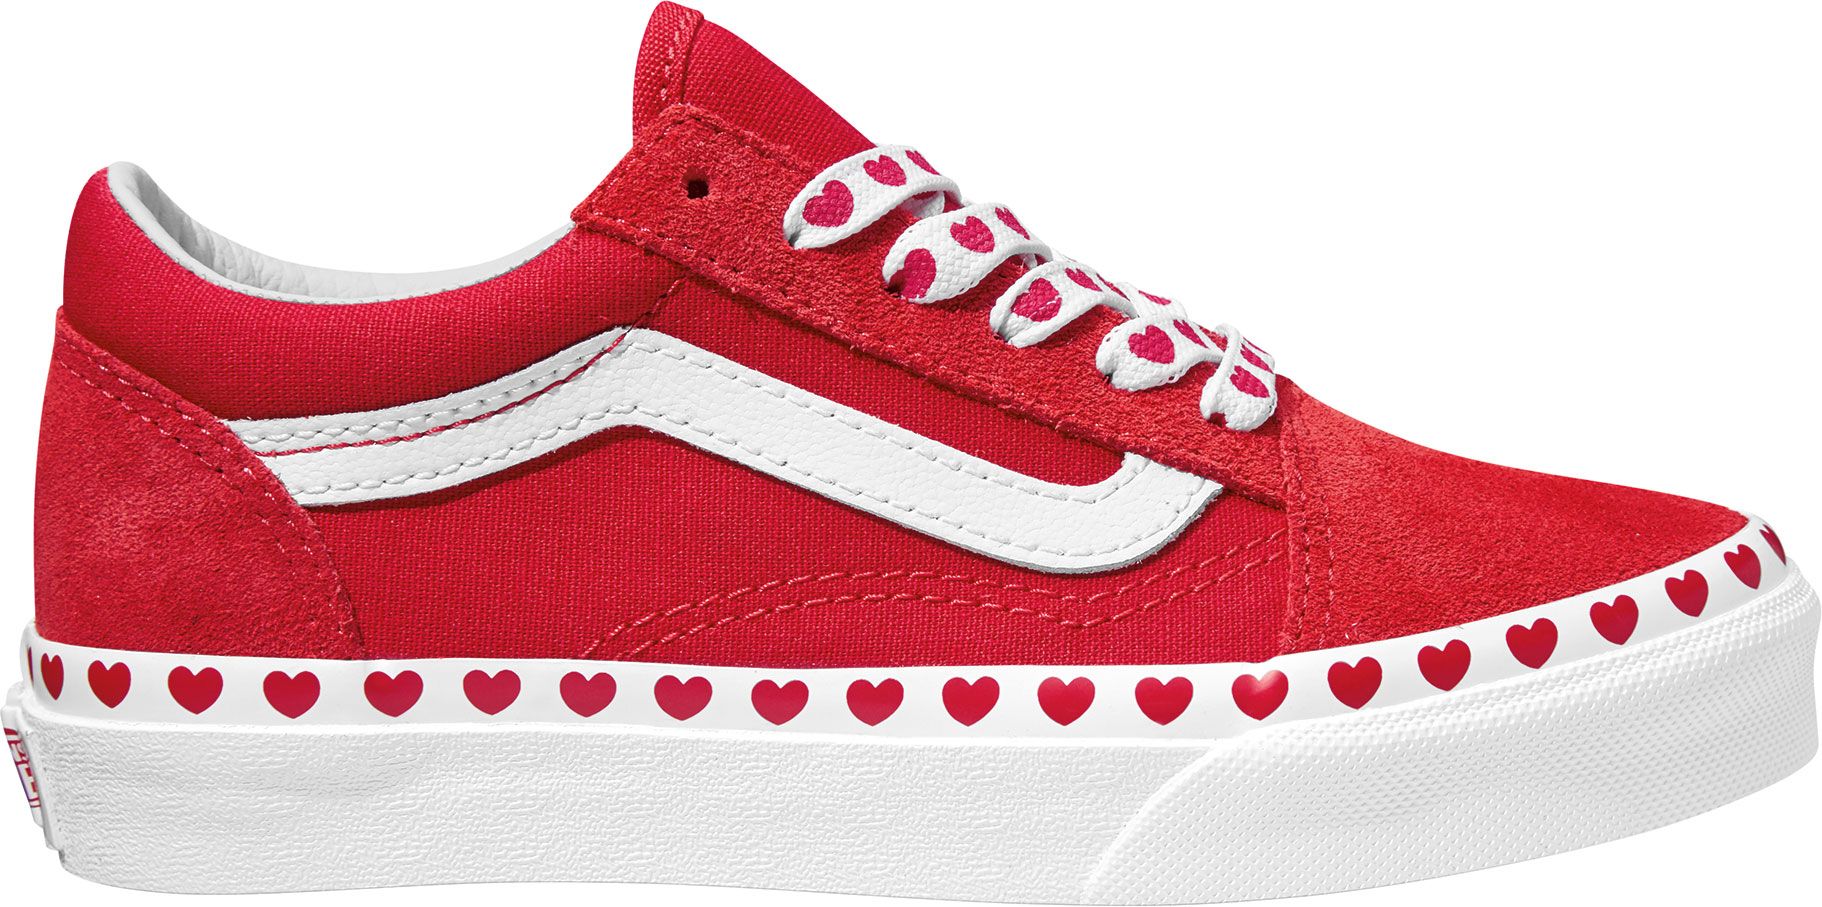 vans heart shoes